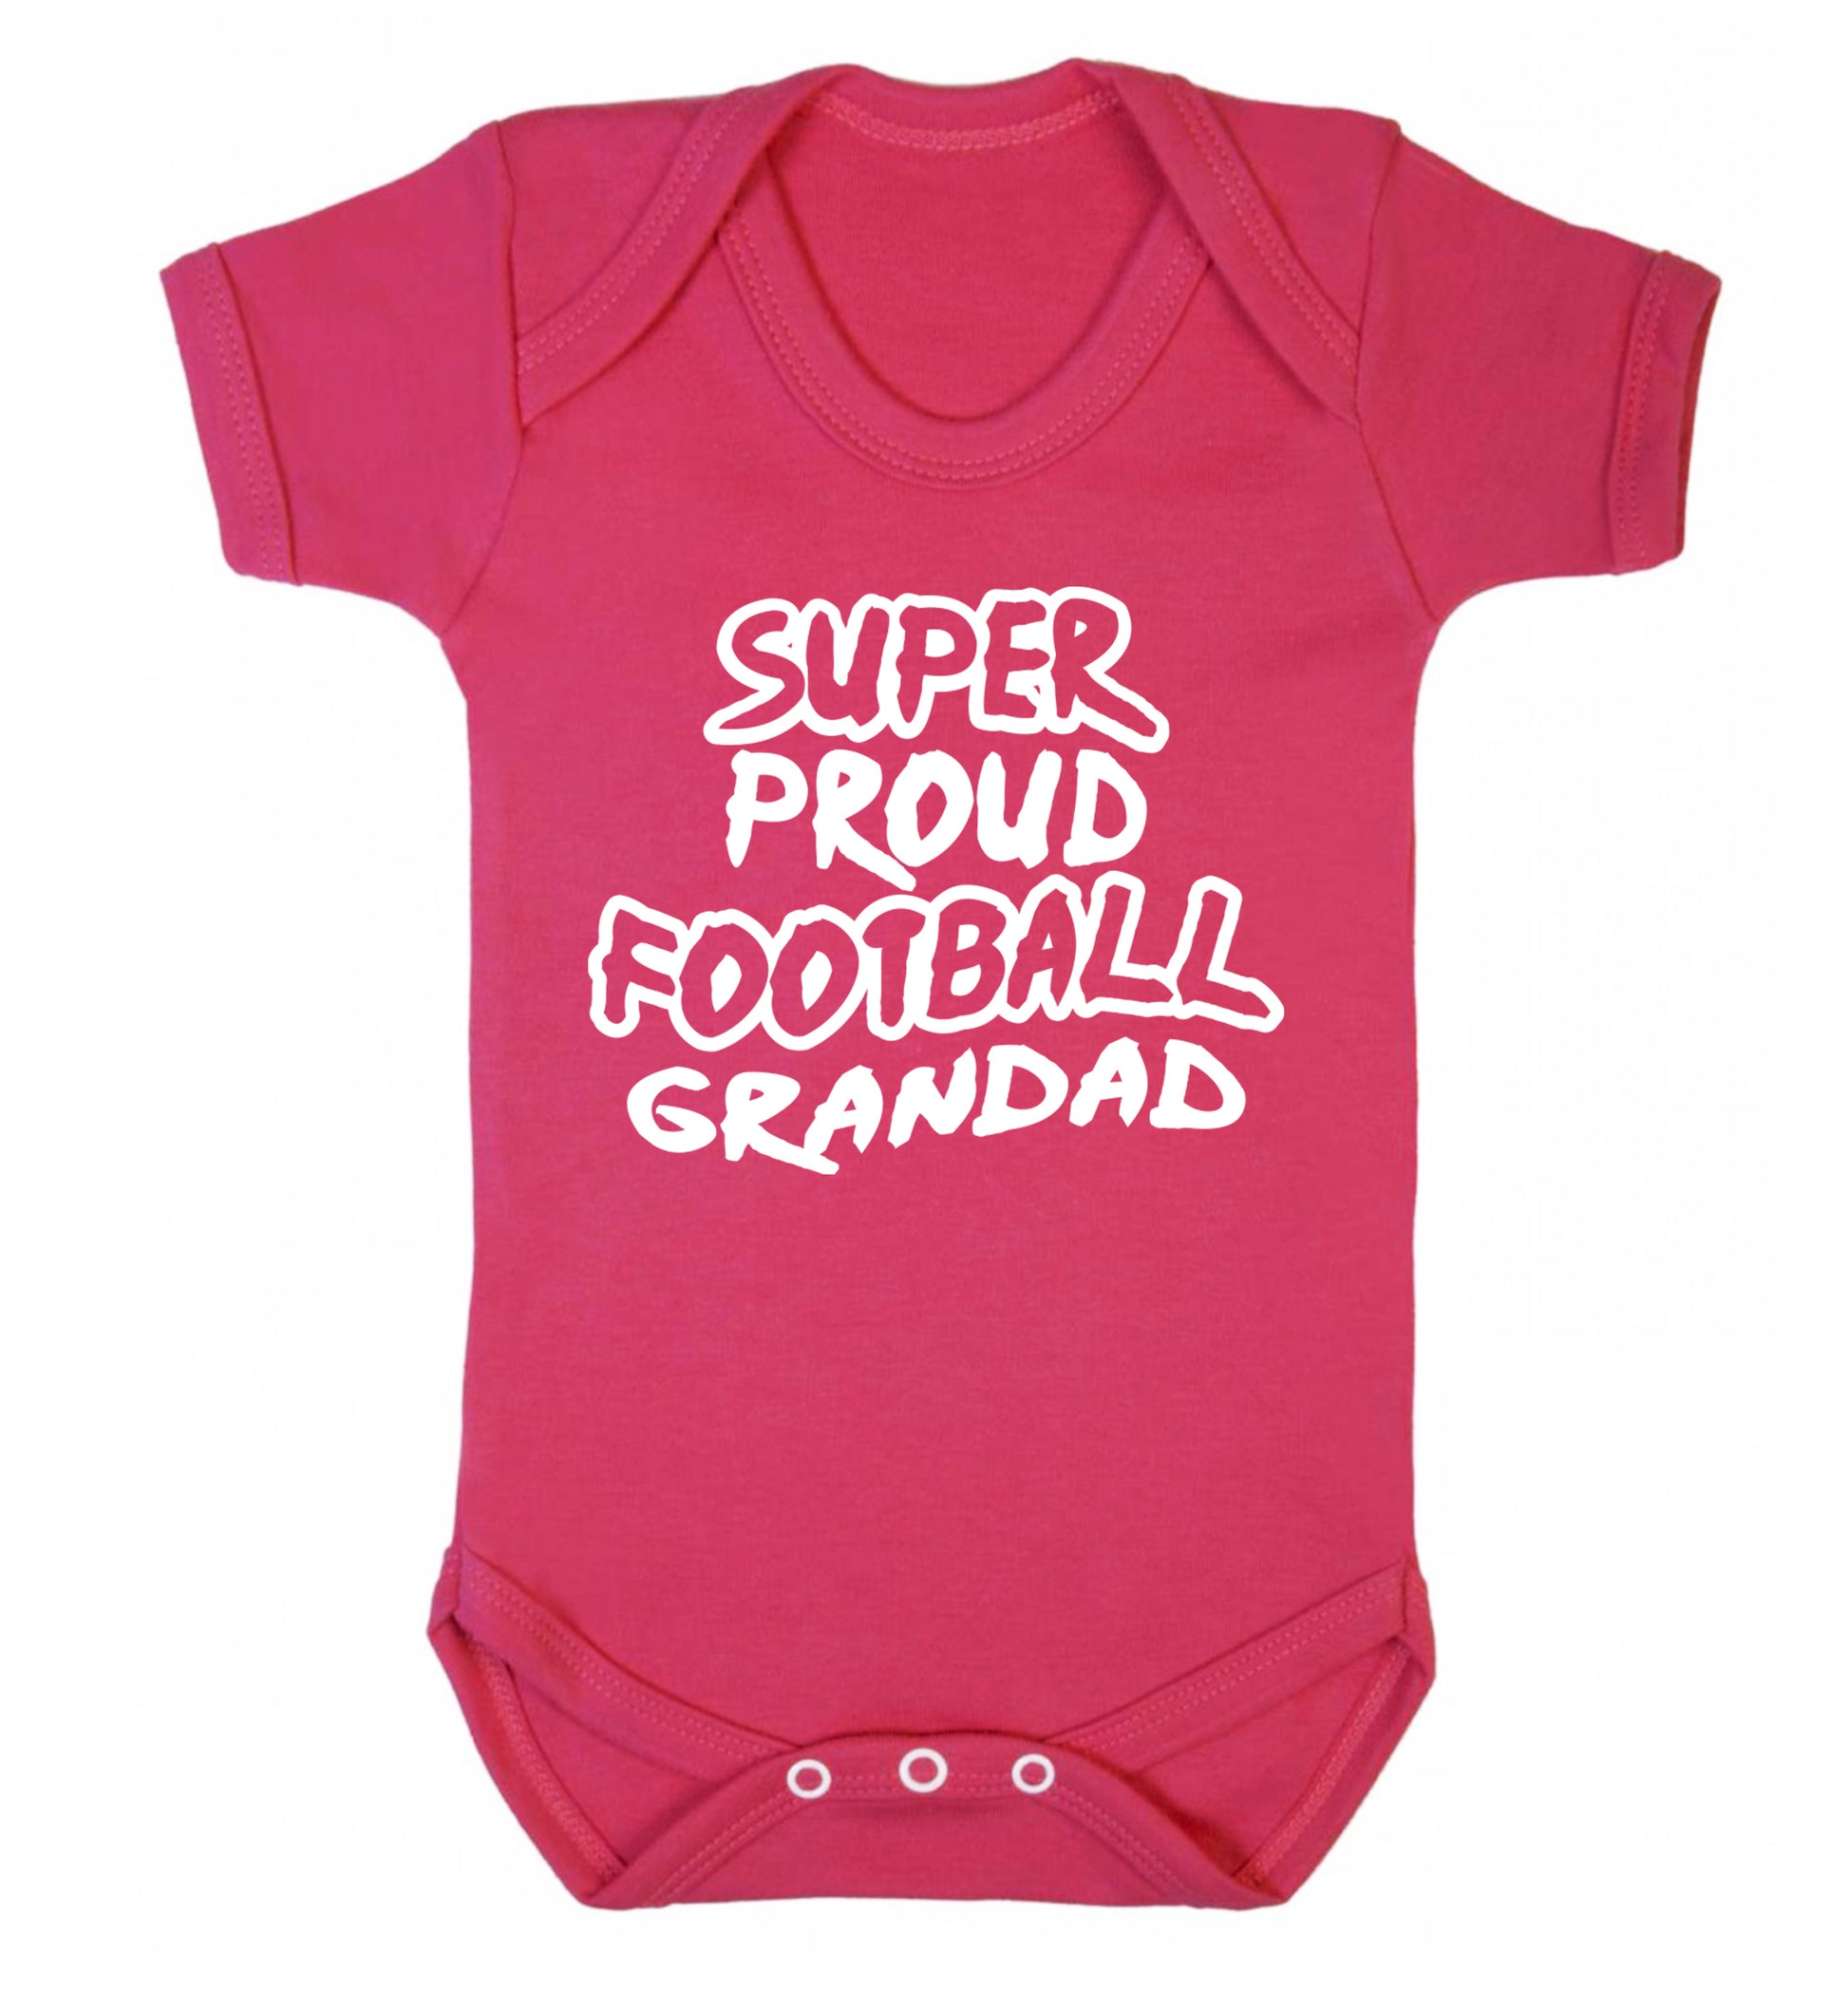 Super proud football grandad Baby Vest dark pink 18-24 months